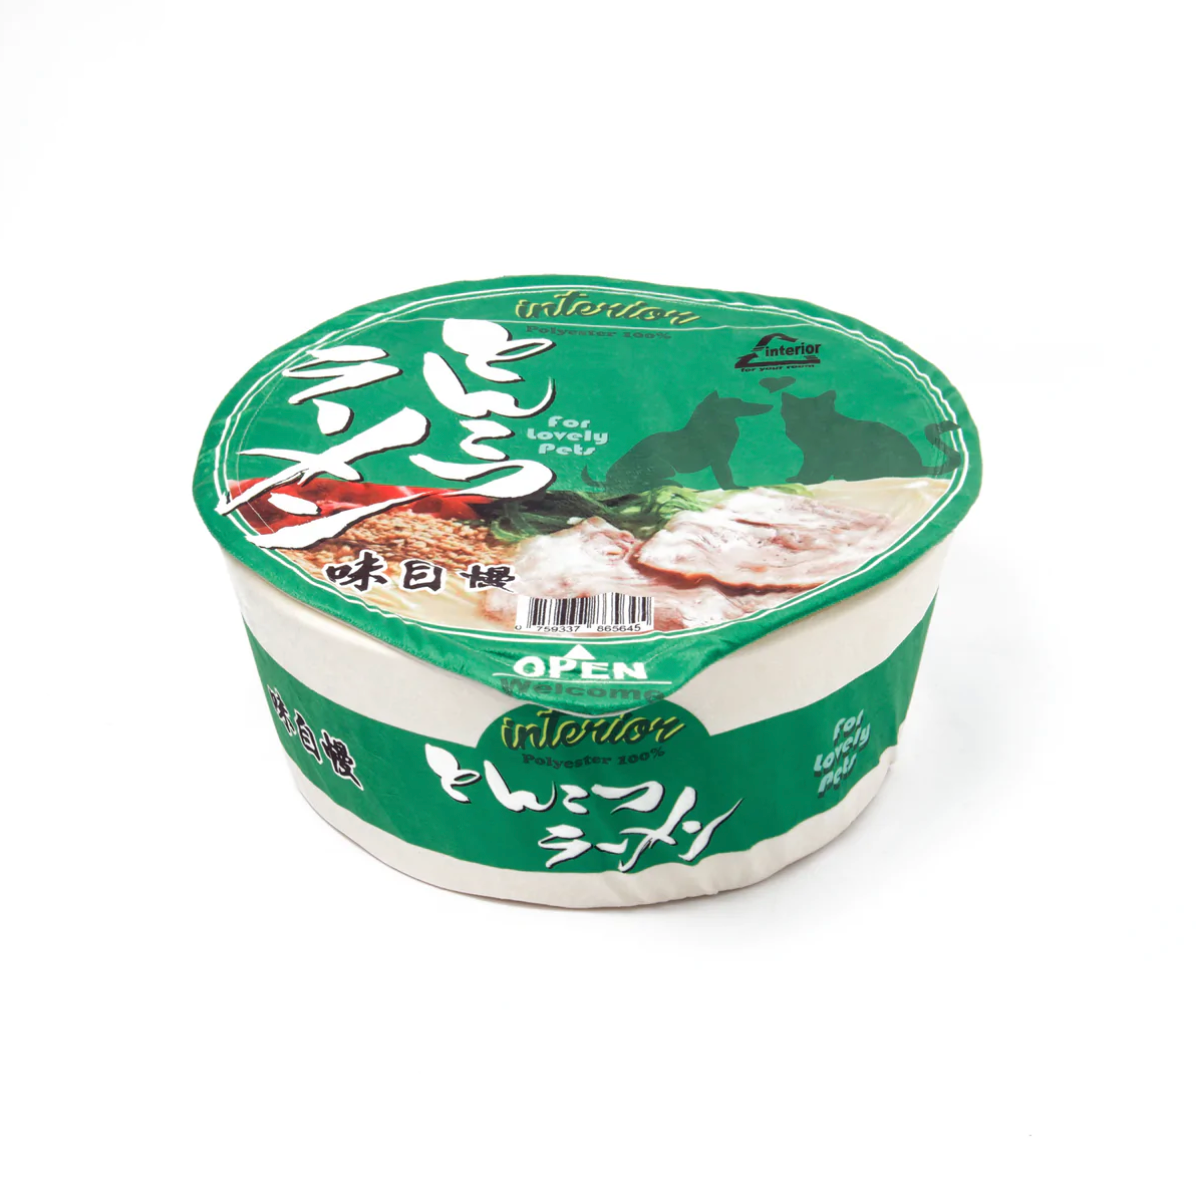 KASHIMA Instant Noodles Pet Nest